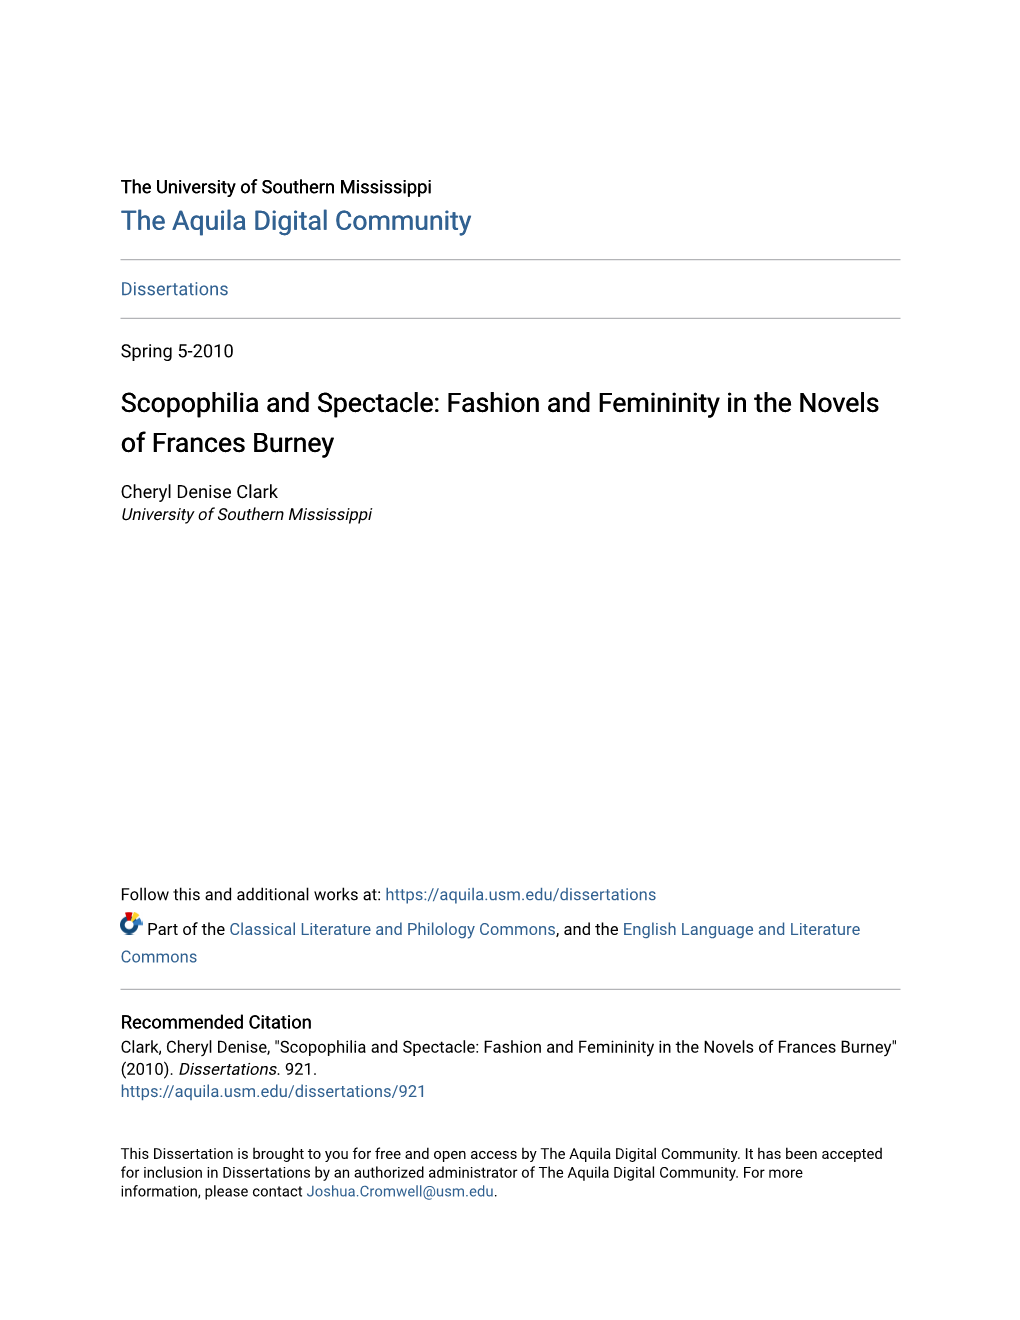 Fashion and Femininity in the Novels of Frances Burney